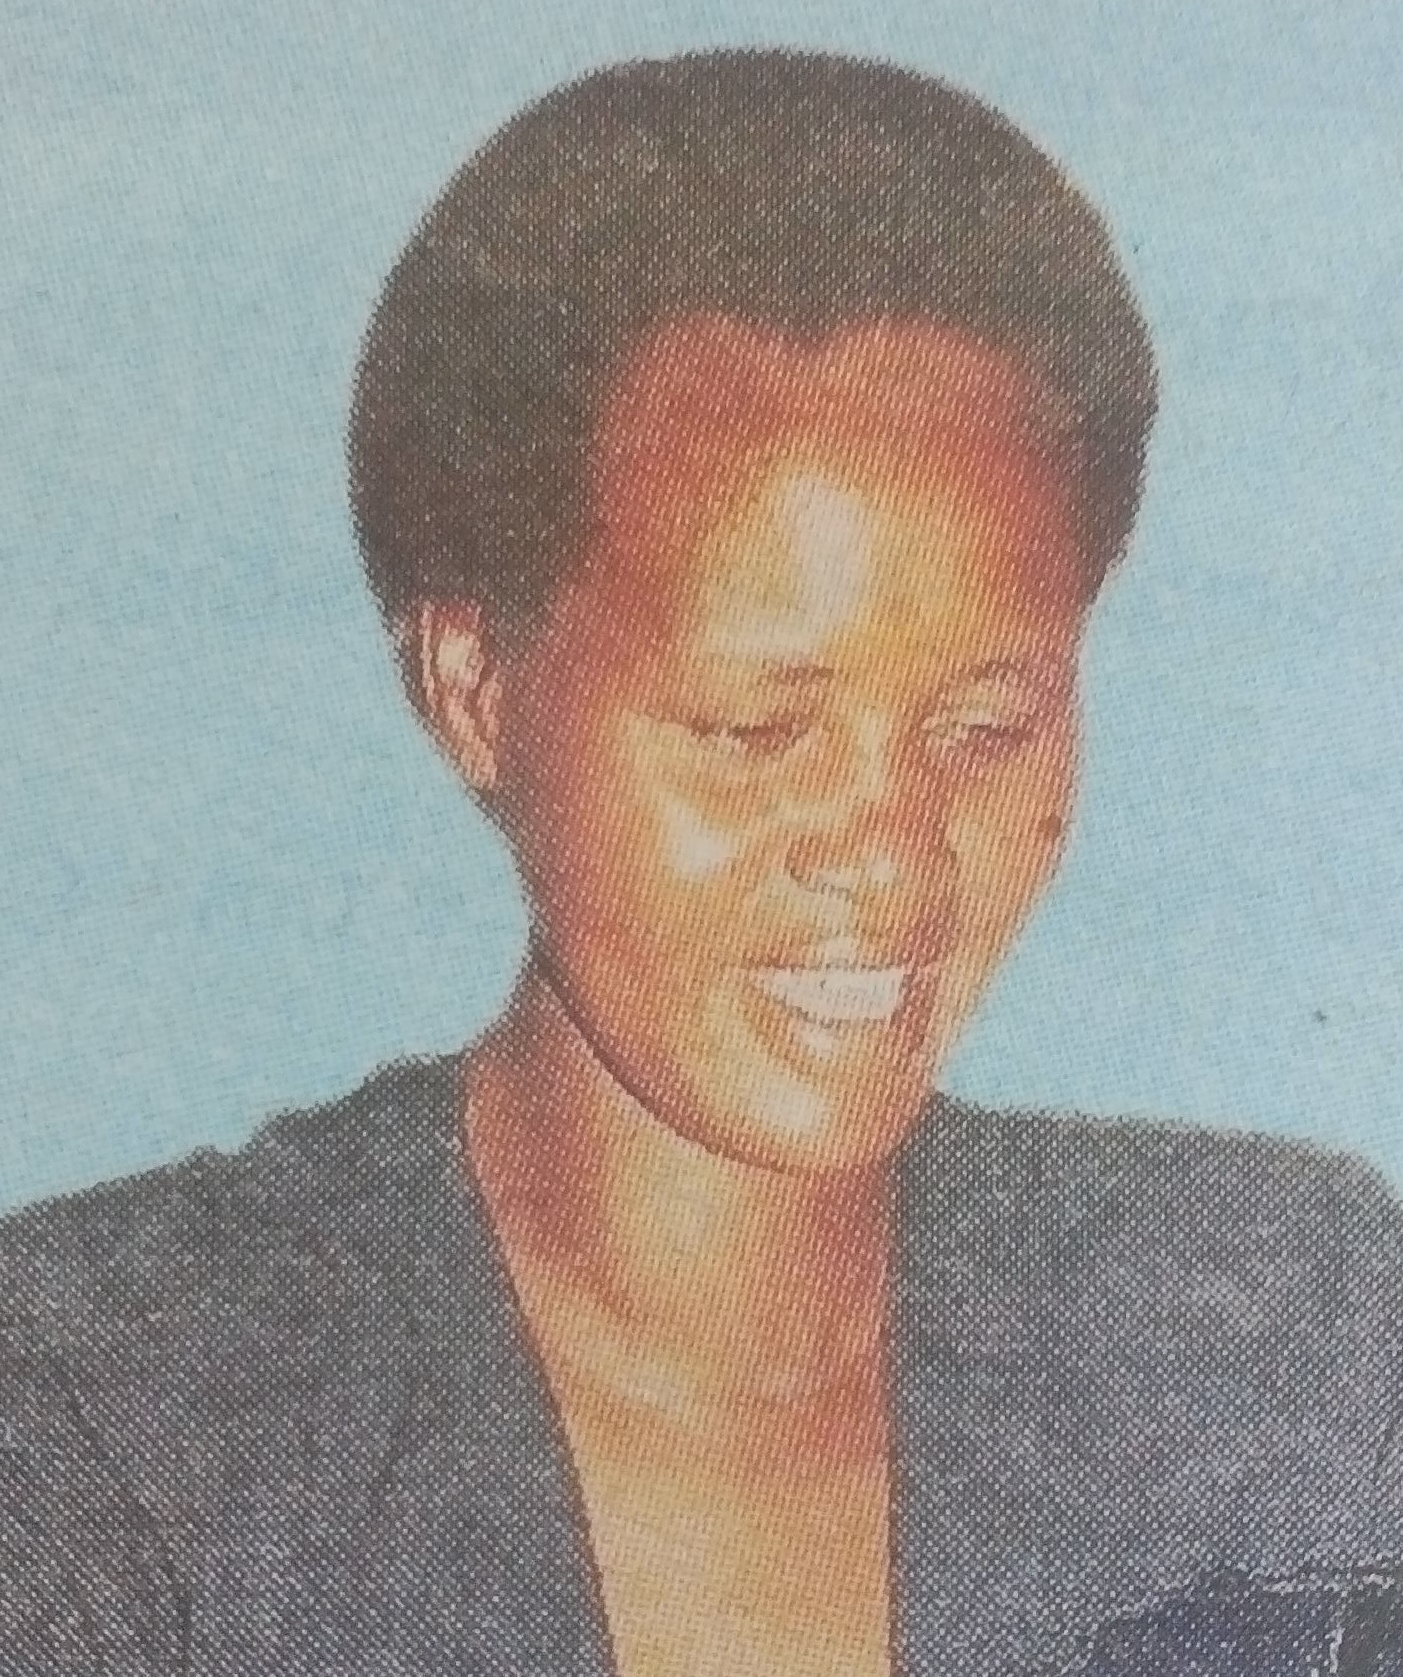 Obituary Image of Ann Chelang’at Yegon